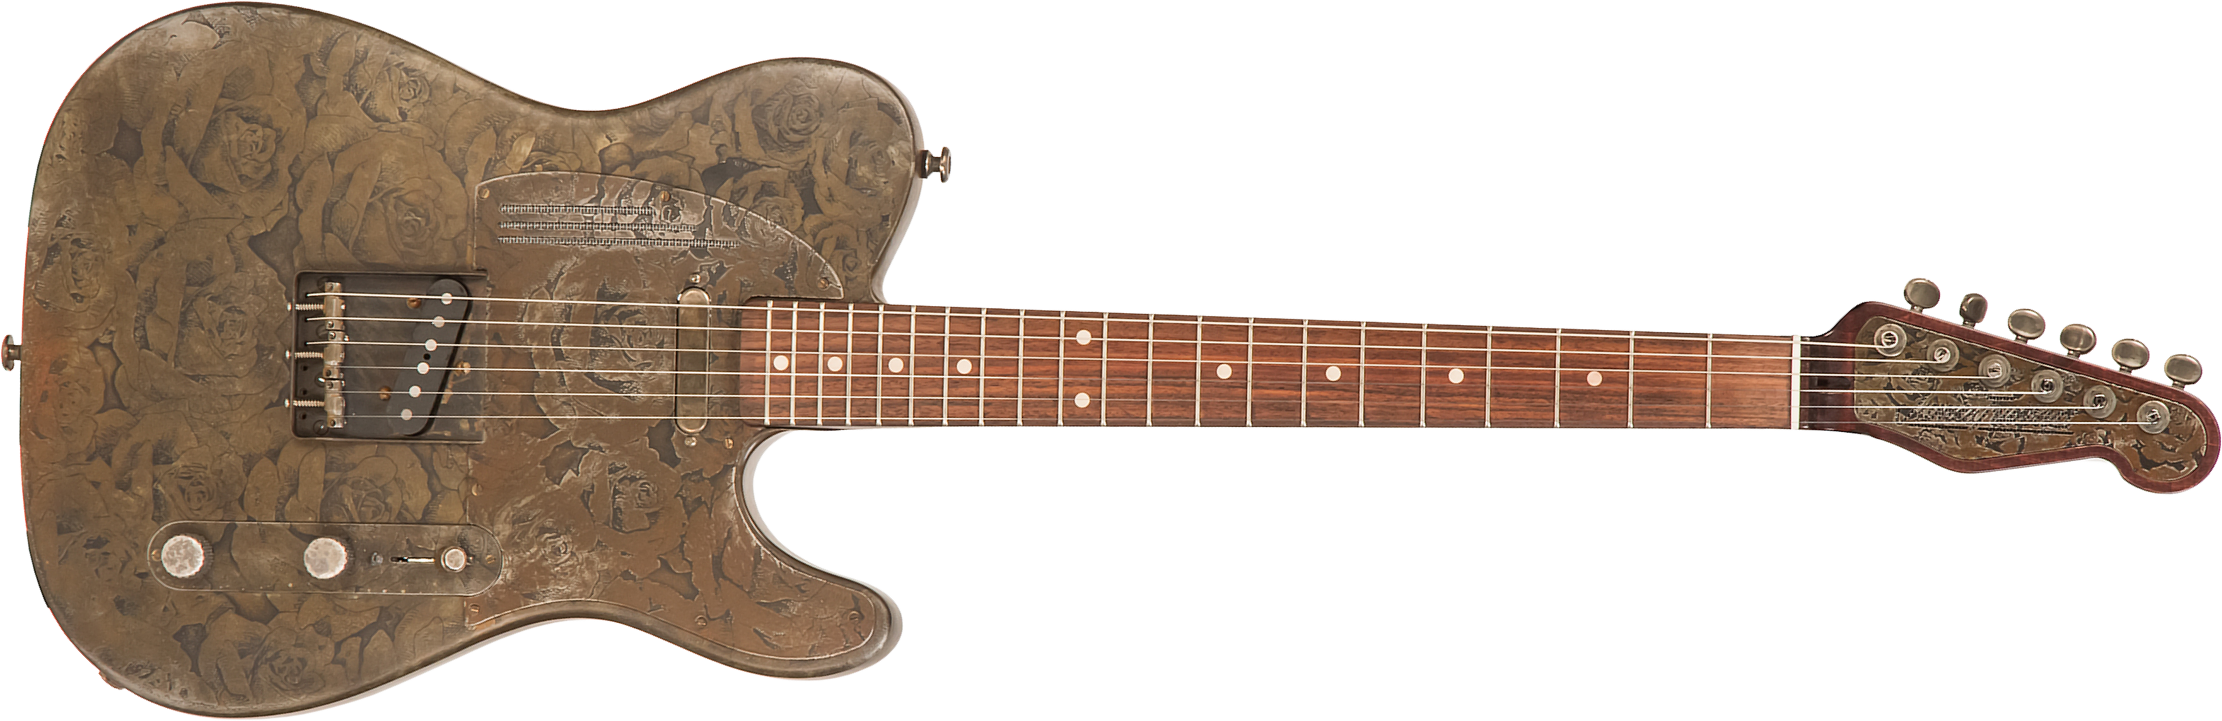 James Trussart Steelcaster Perf.back 2s Ht Rw #21000 - Rusty Roses - Guitare Électrique 1/2 Caisse - Main picture